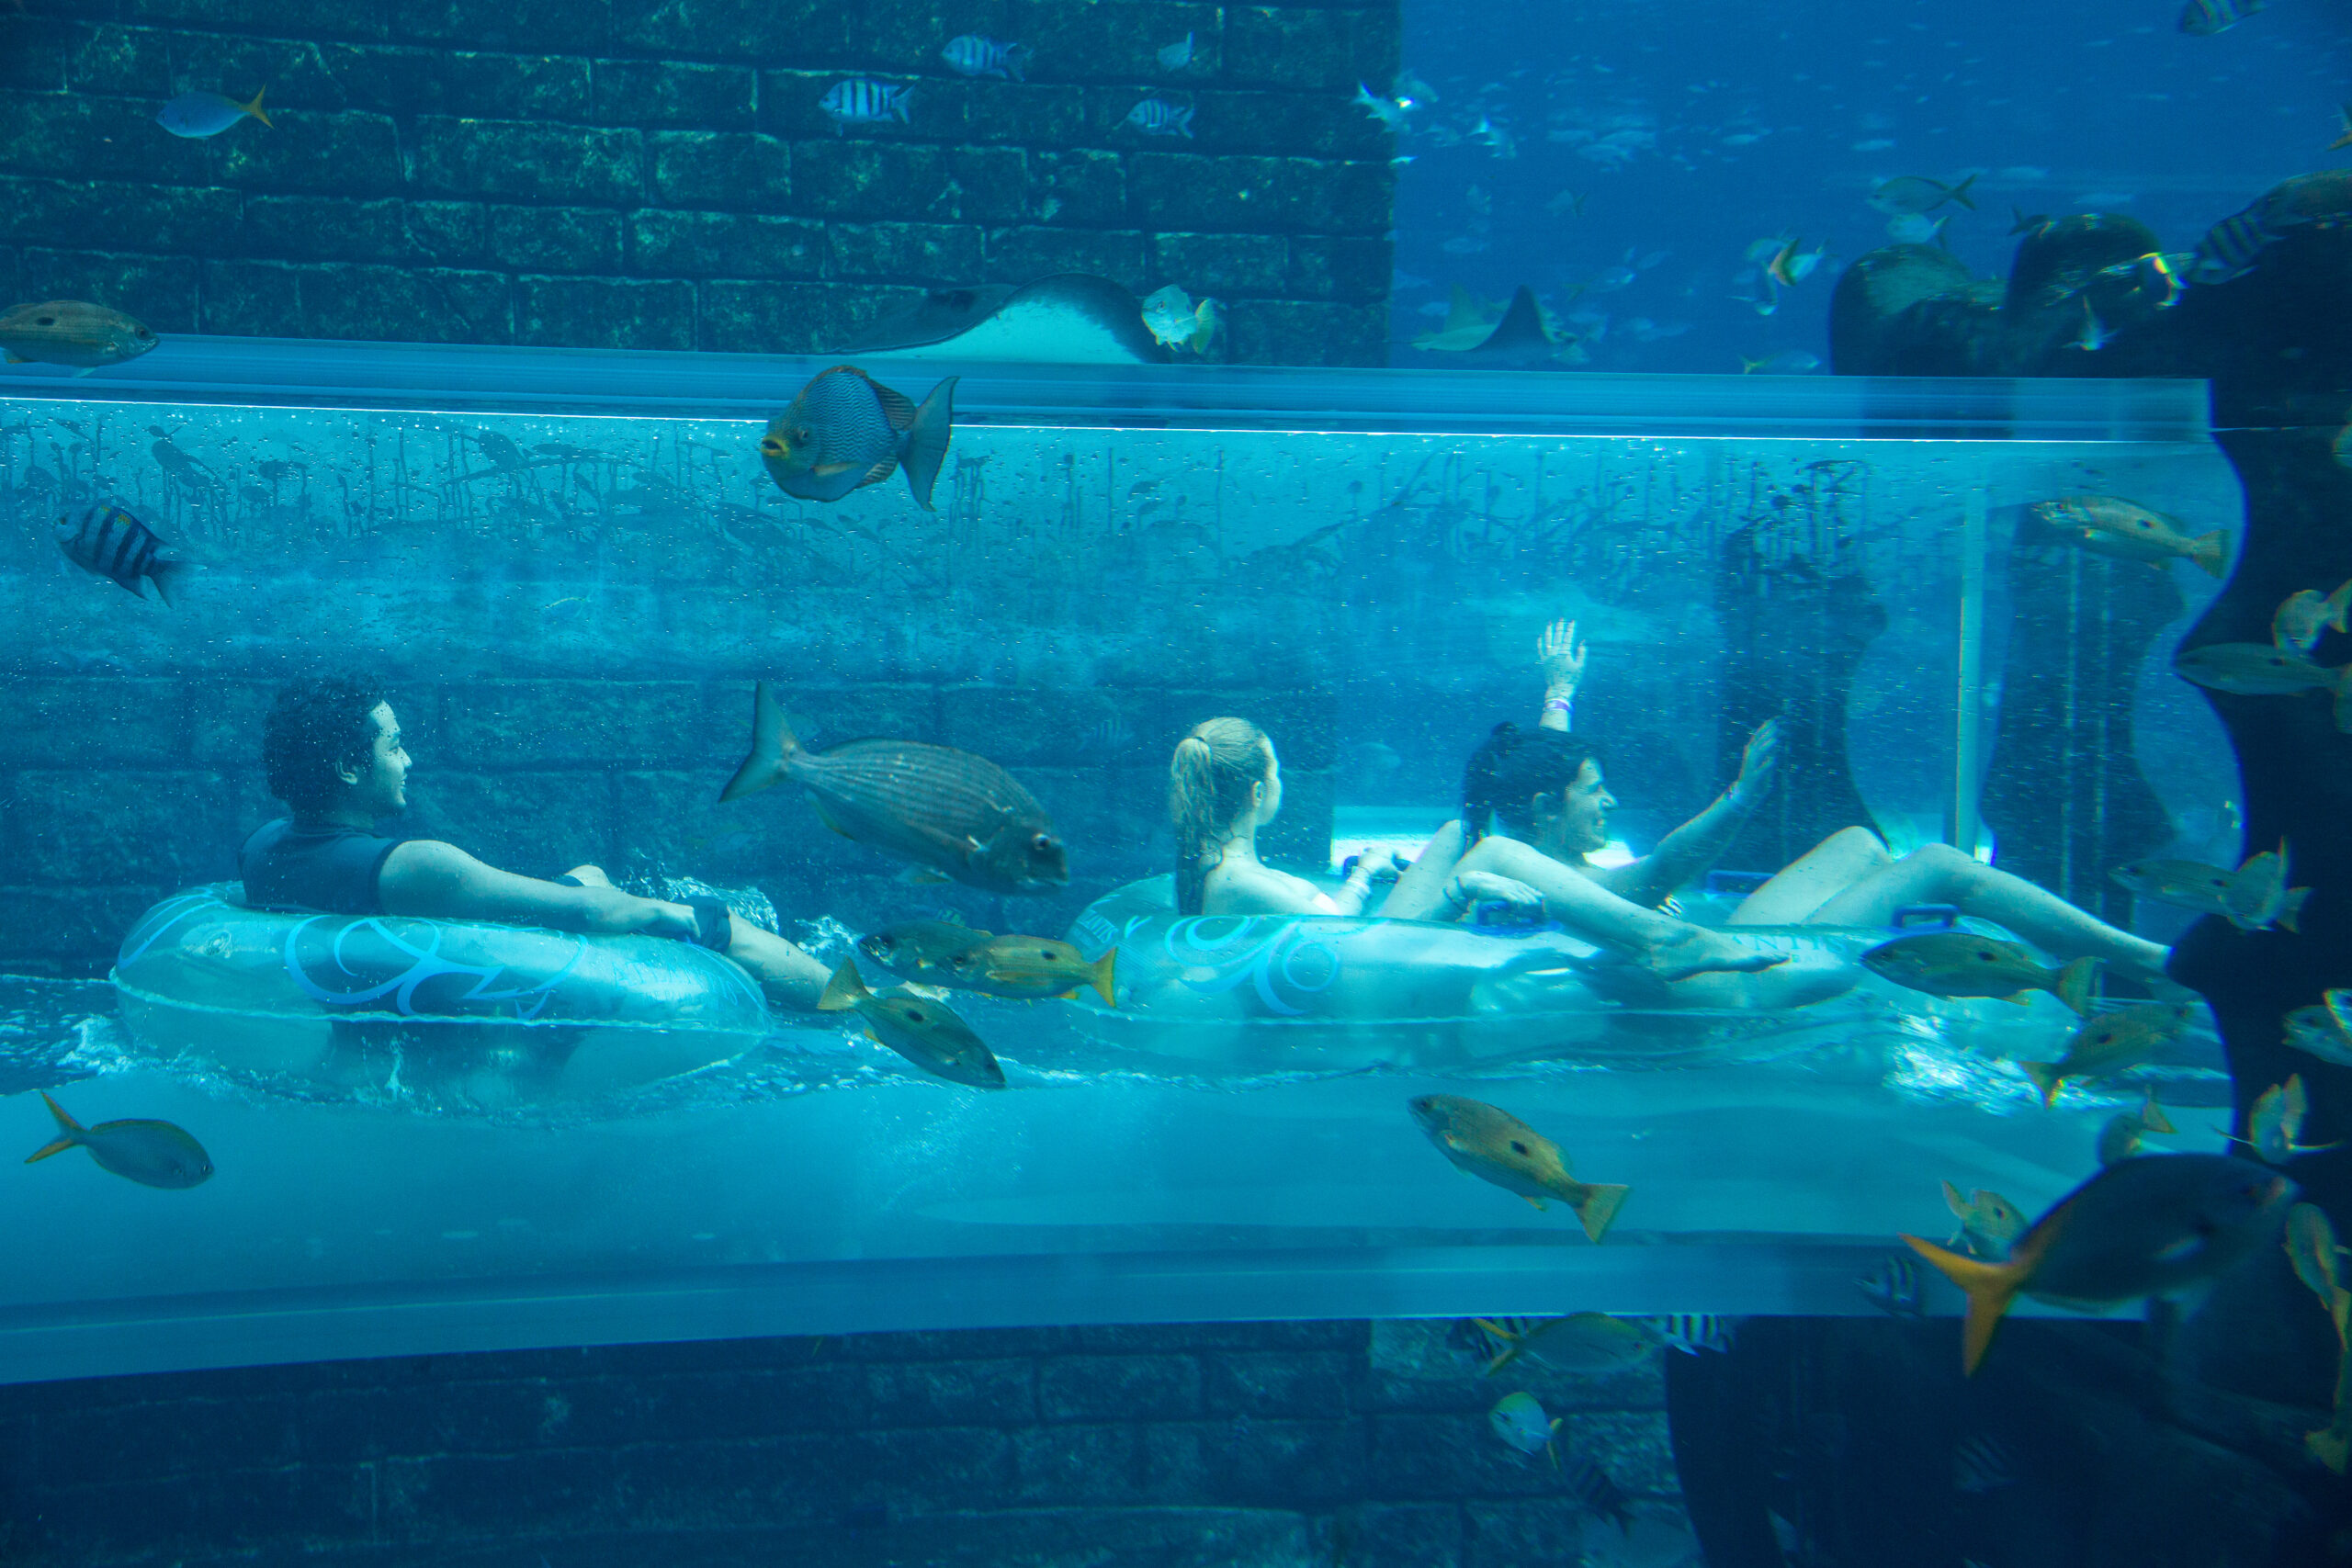 Aquaventure Waterpark Dubai - Sharks tunnel